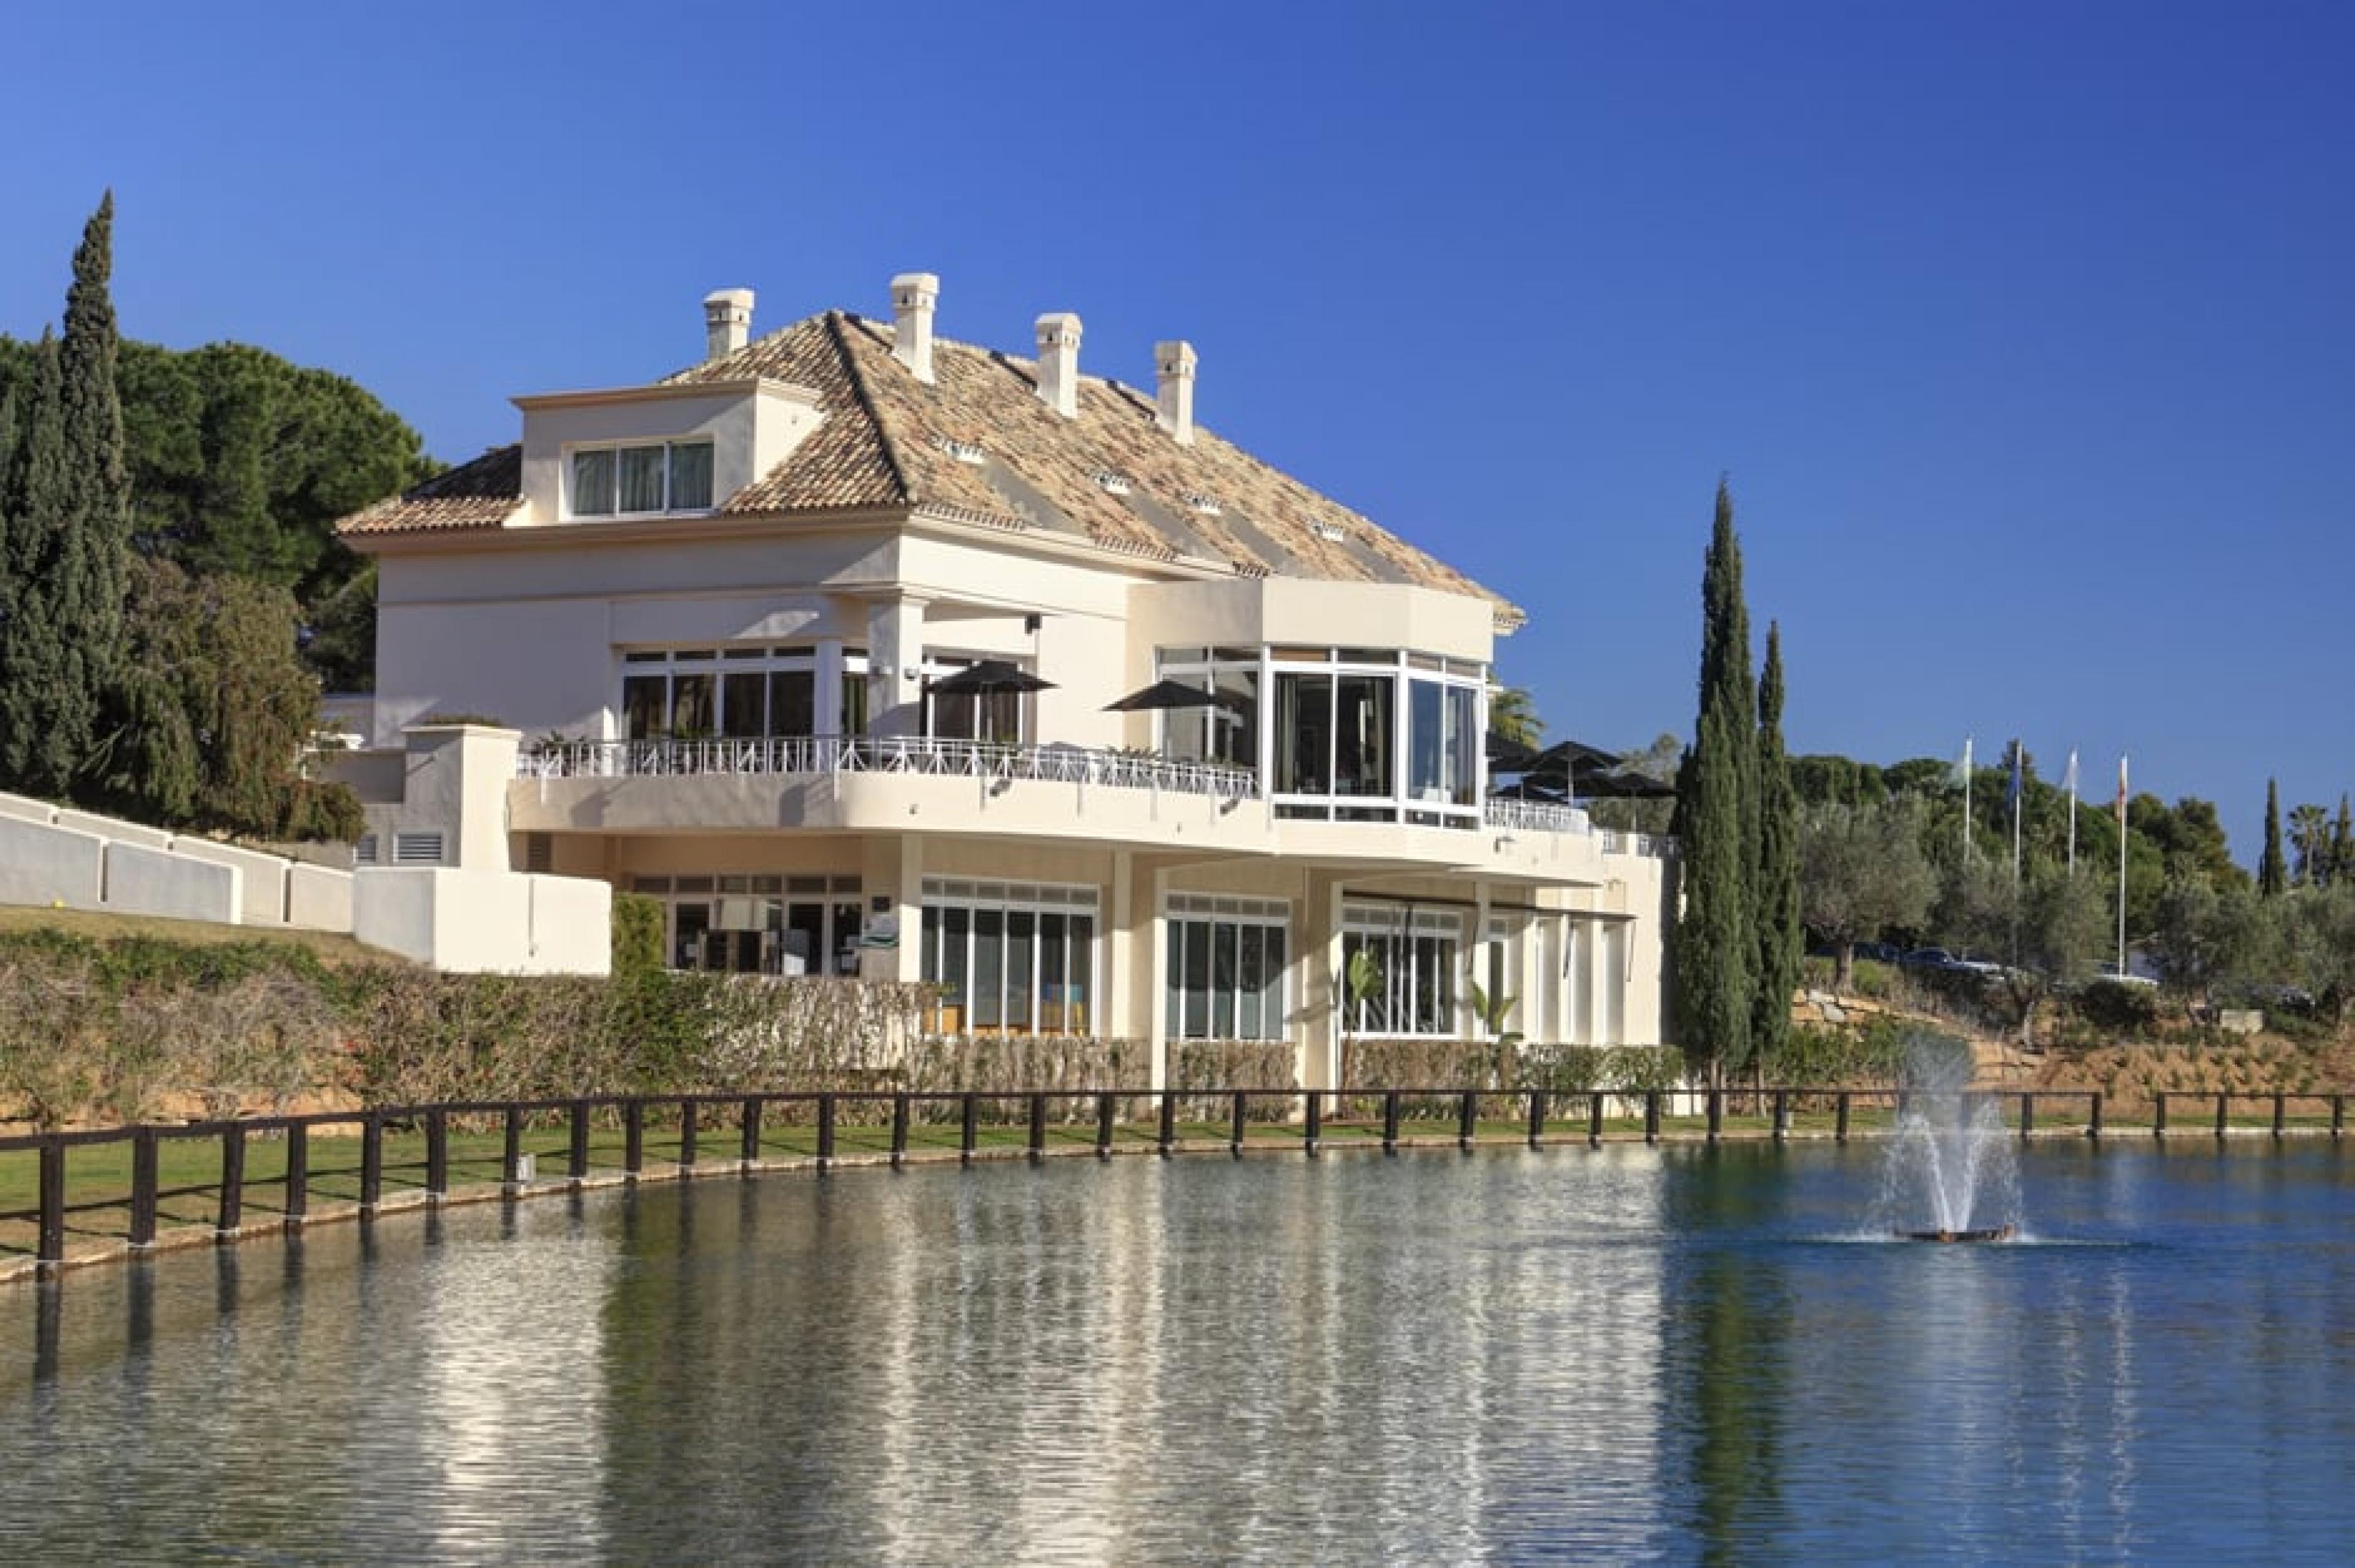 Exterior View - El Lago Restaurant, Marbella, Spain - Courtesy Wayne Chasan